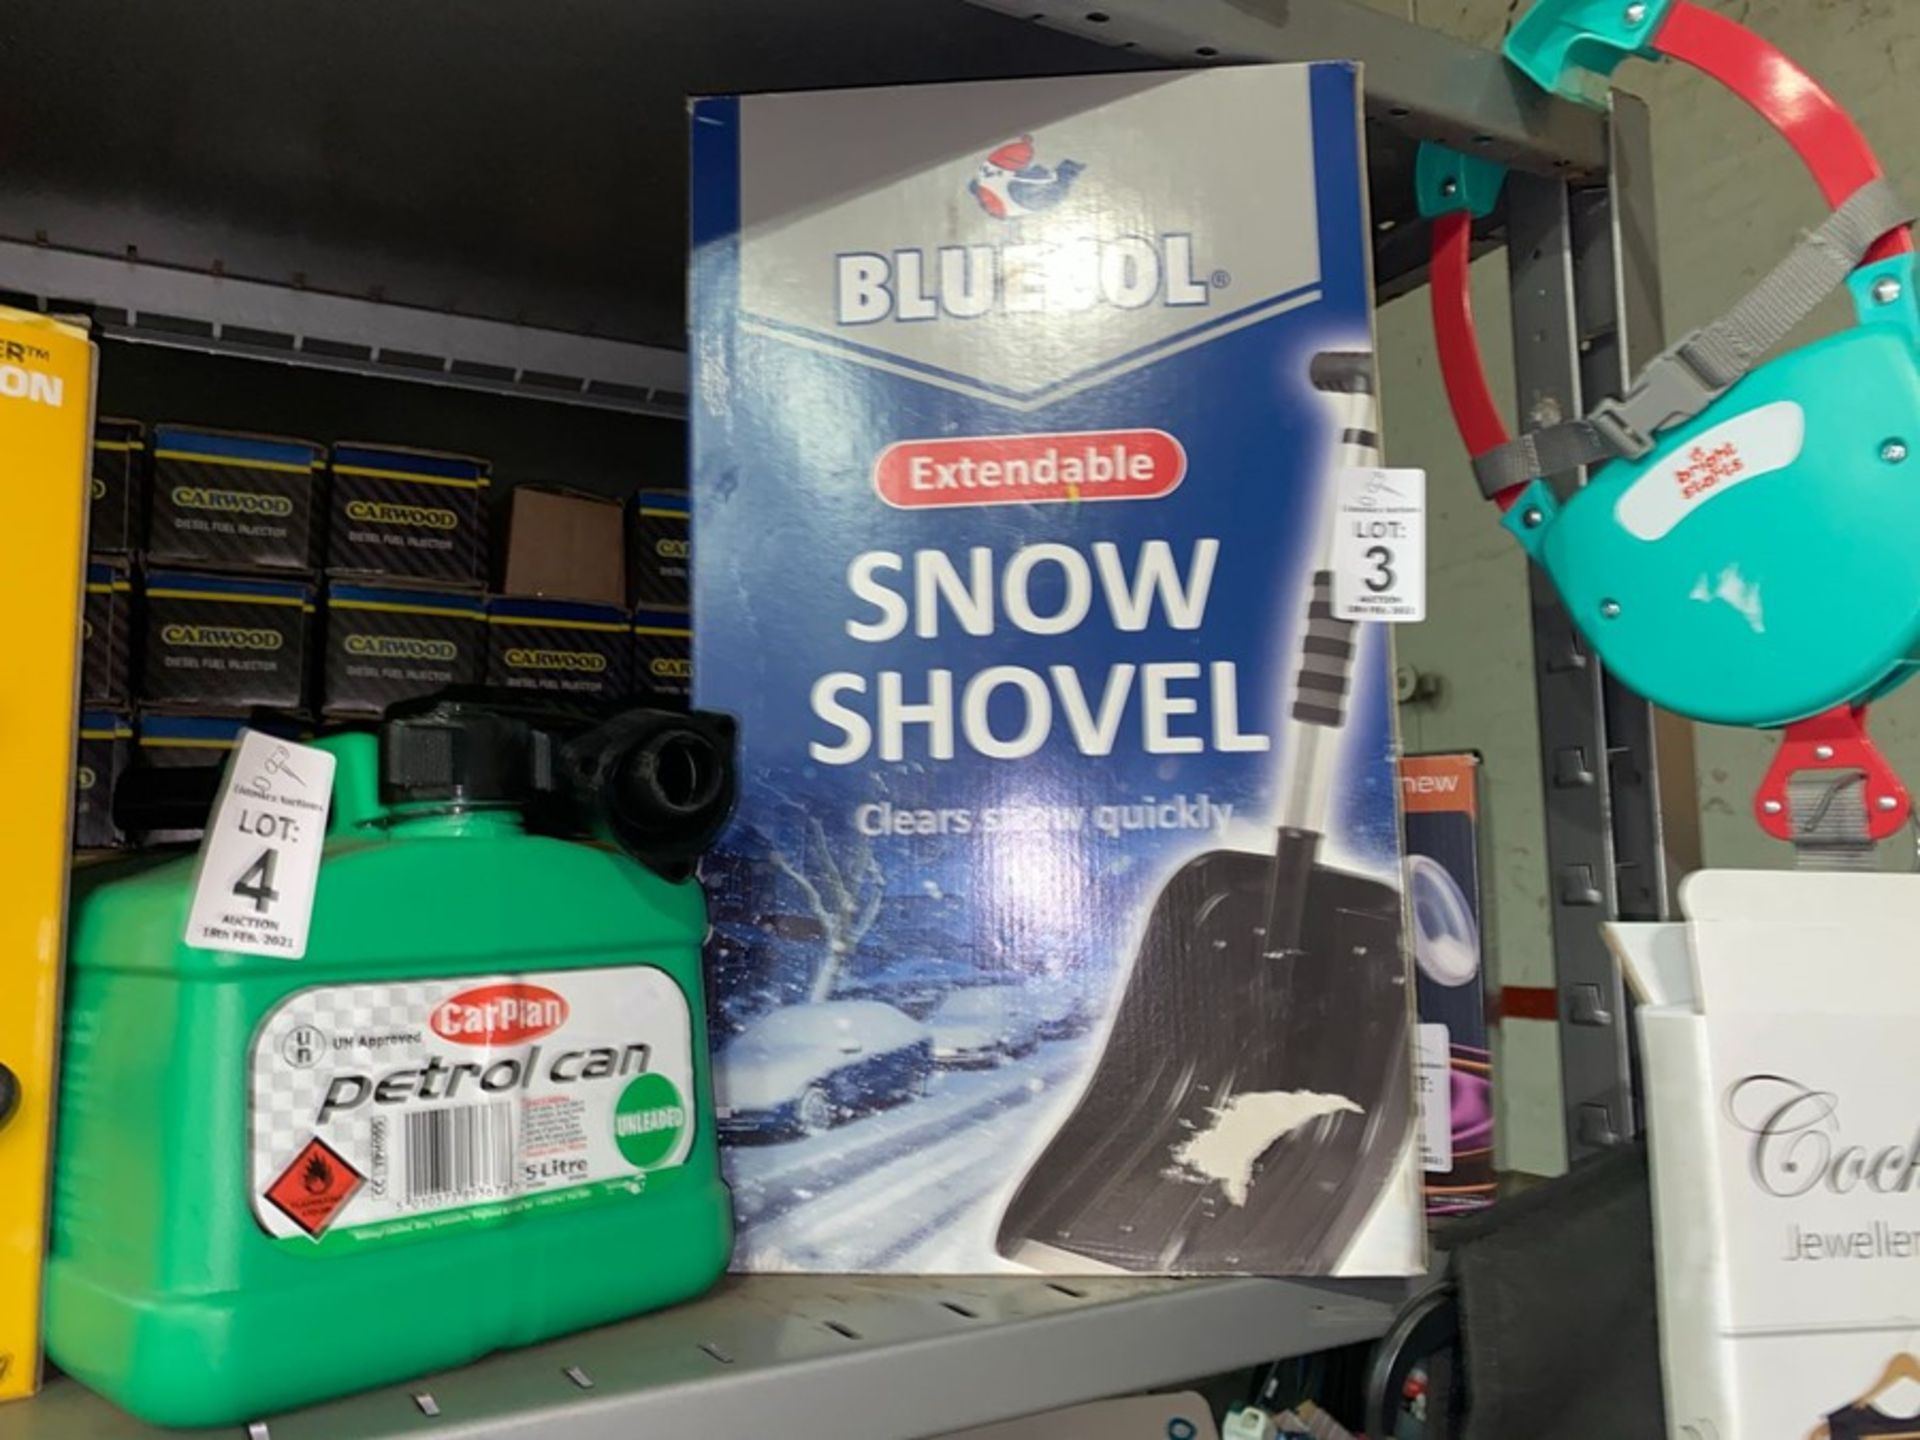 BLUECOL SNOW SHOVEL